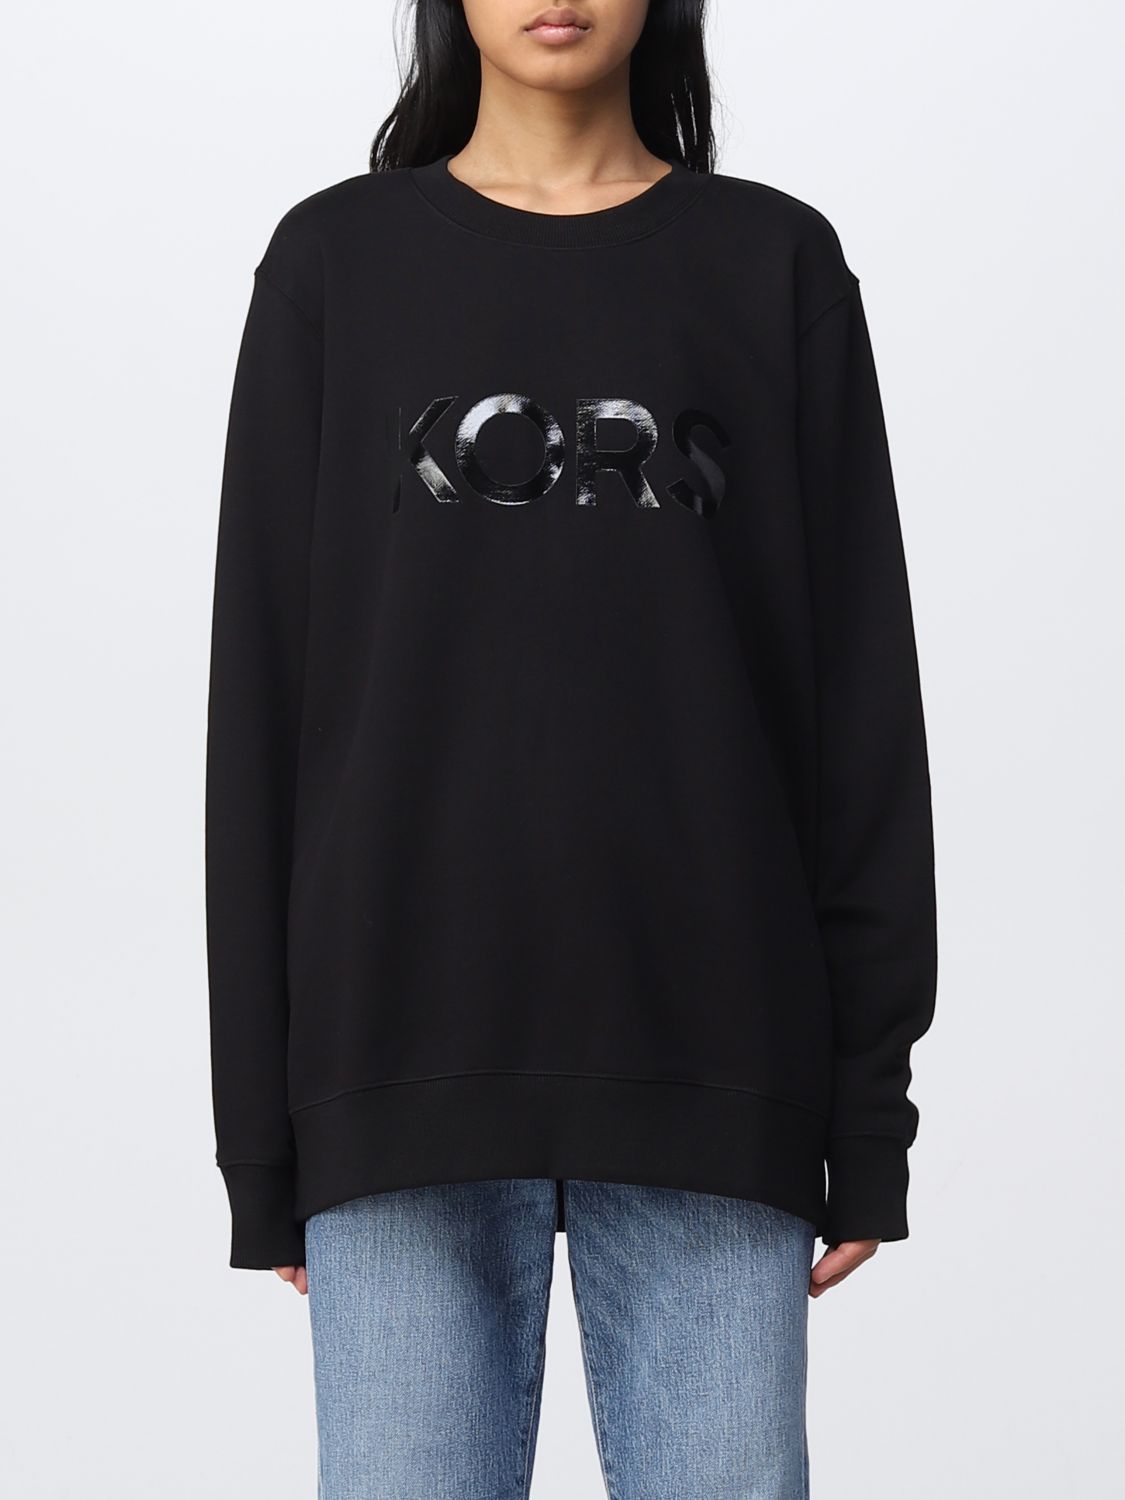 MICHAEL KORS: sweatshirt for women - Black | Michael Kors sweatshirt  MU250QN4MY online on 